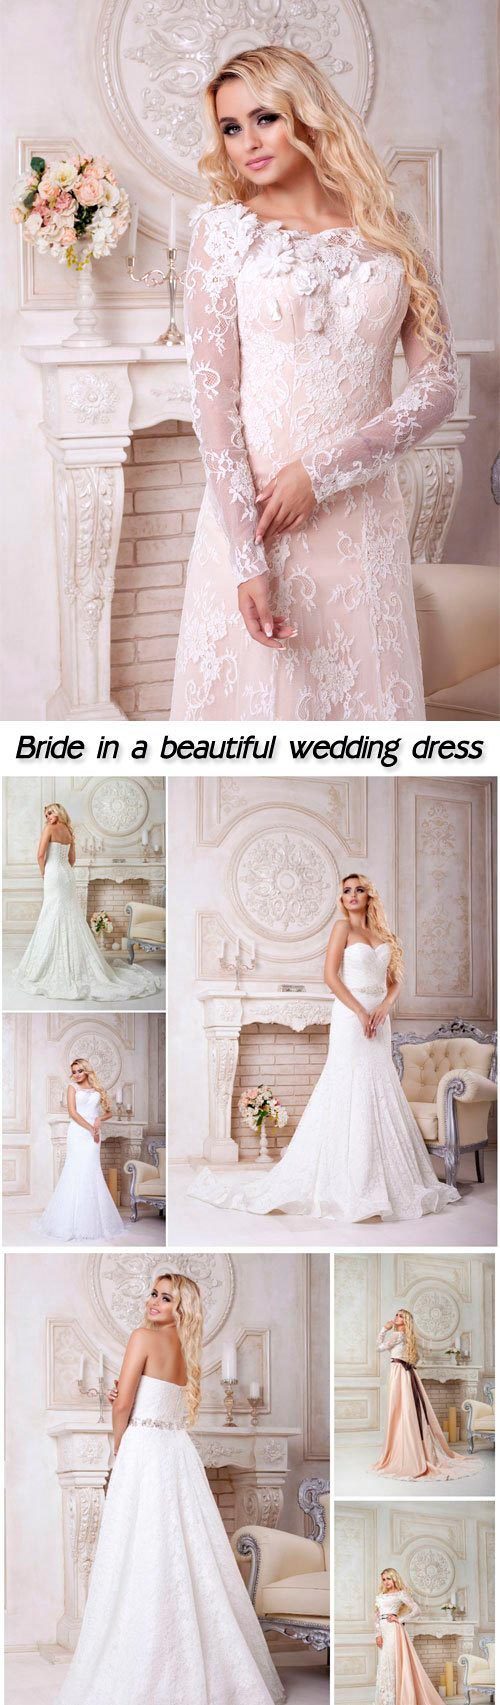 bride-in-a-beautiful-wedding-dress-6925434